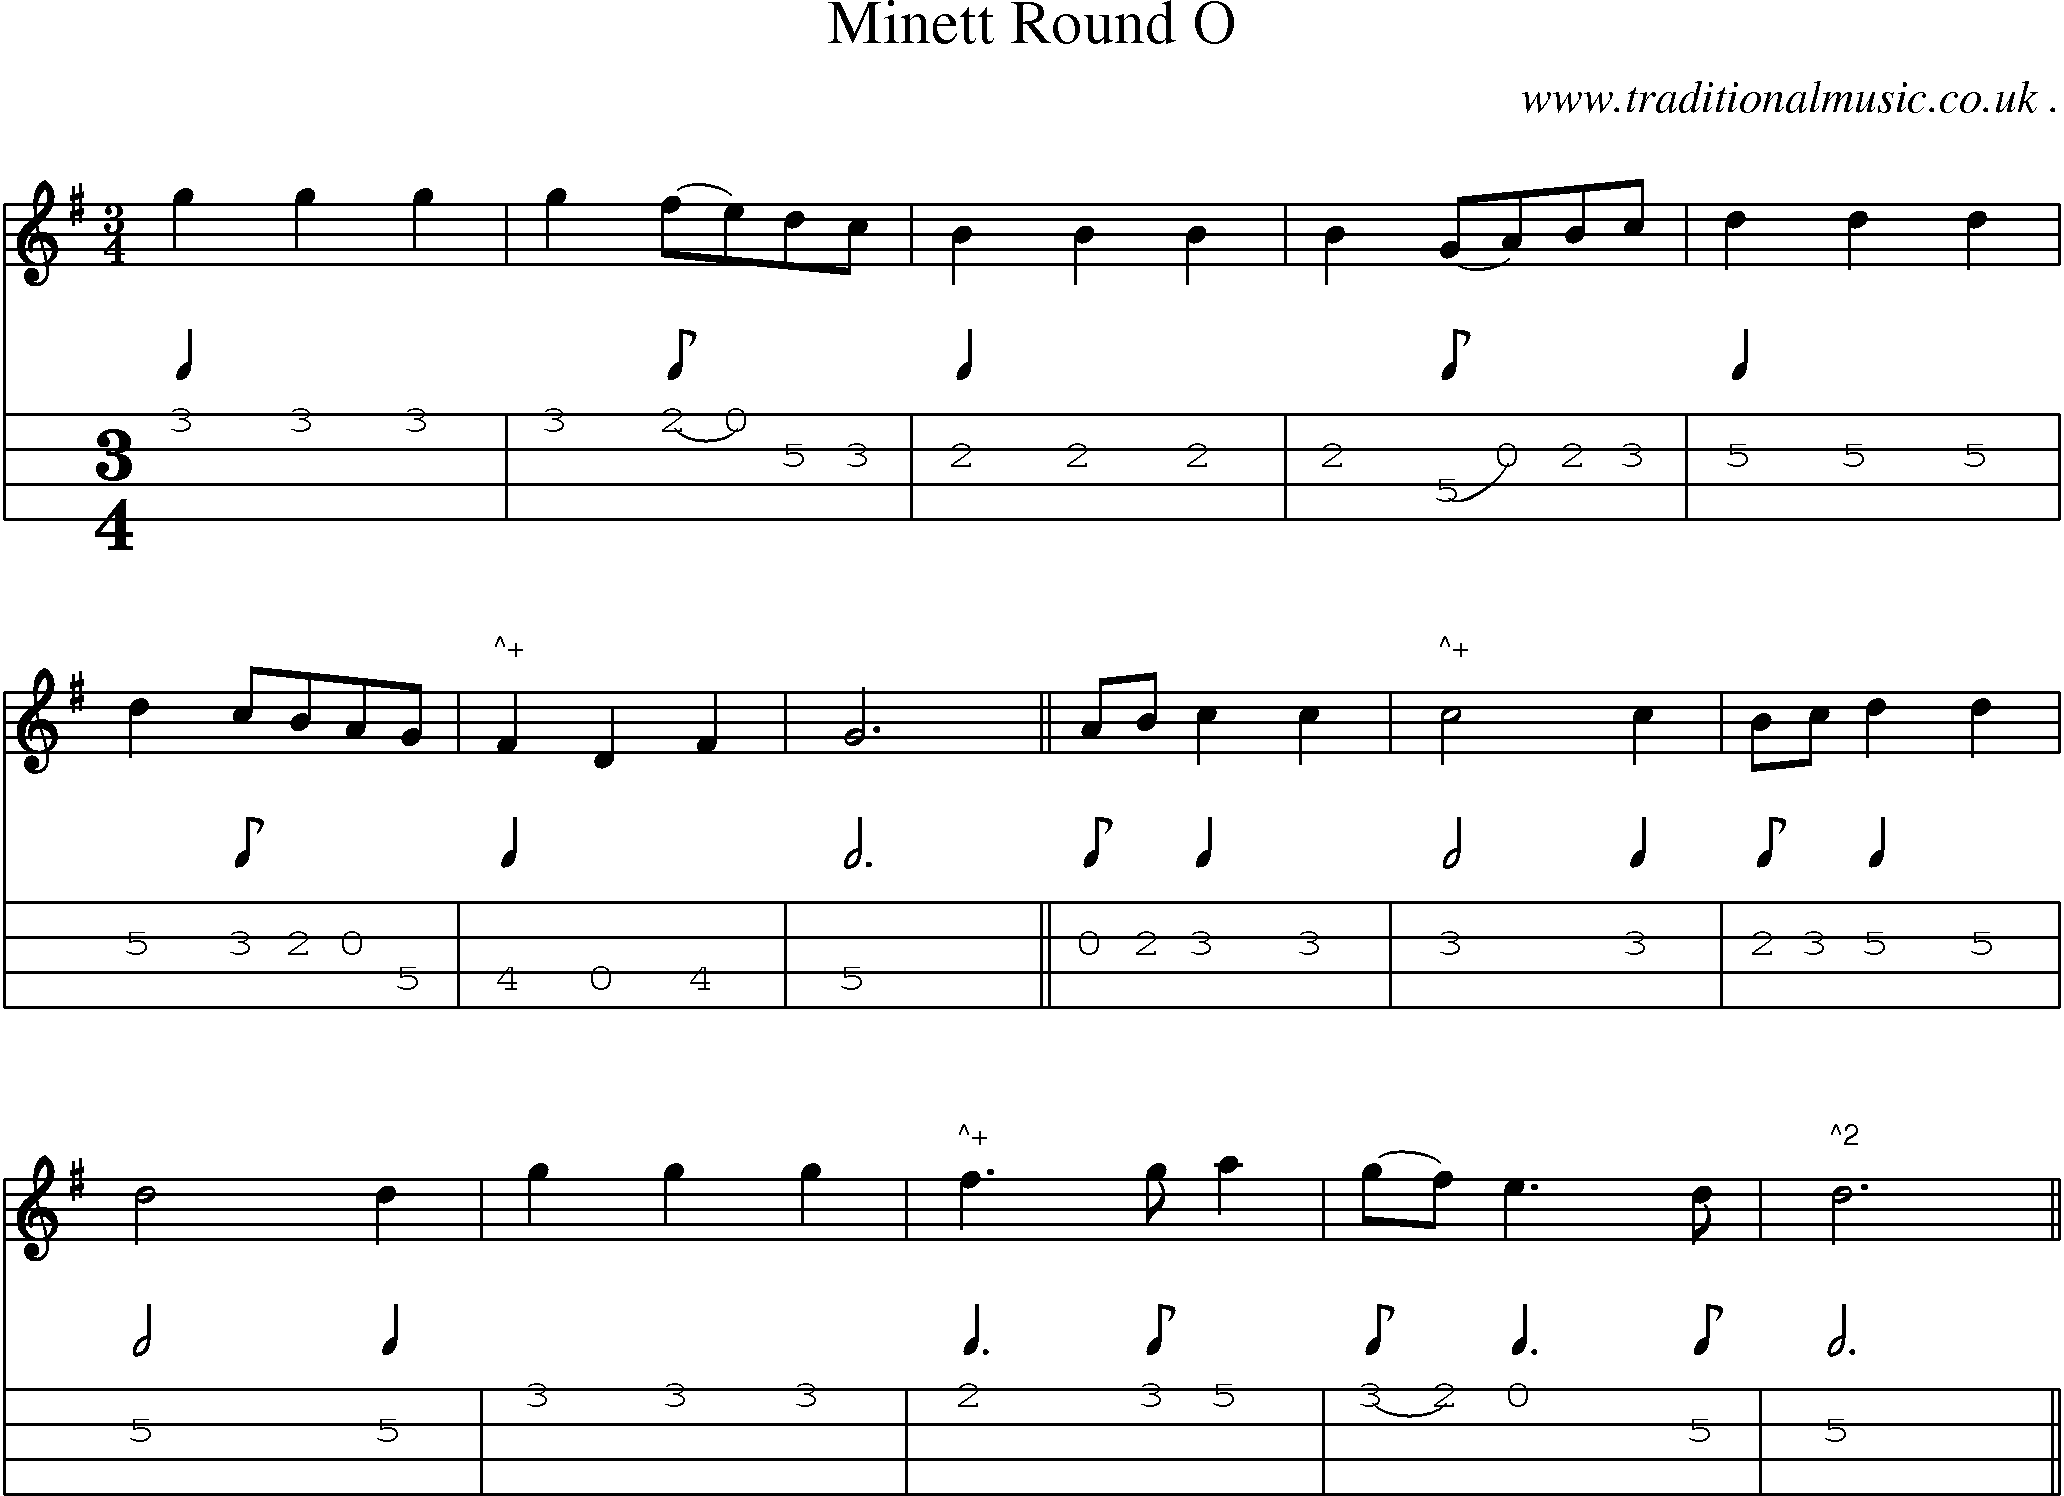 Sheet-Music and Mandolin Tabs for Minett Round O